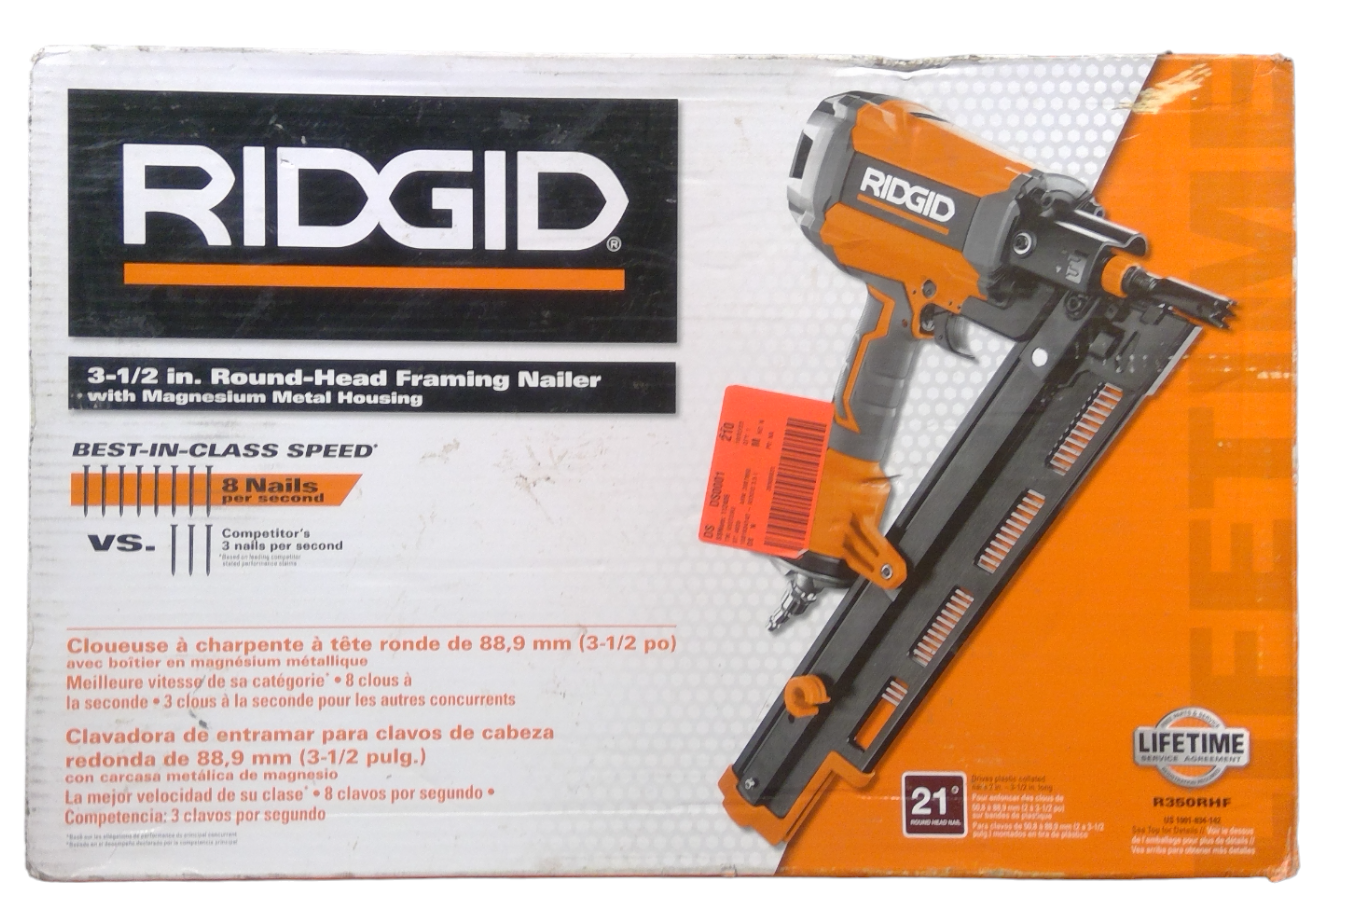 USED - RIDGID R350RHF 3-1/2" Round-Head Framing Nailer (TOOL ONLY) - $134.79